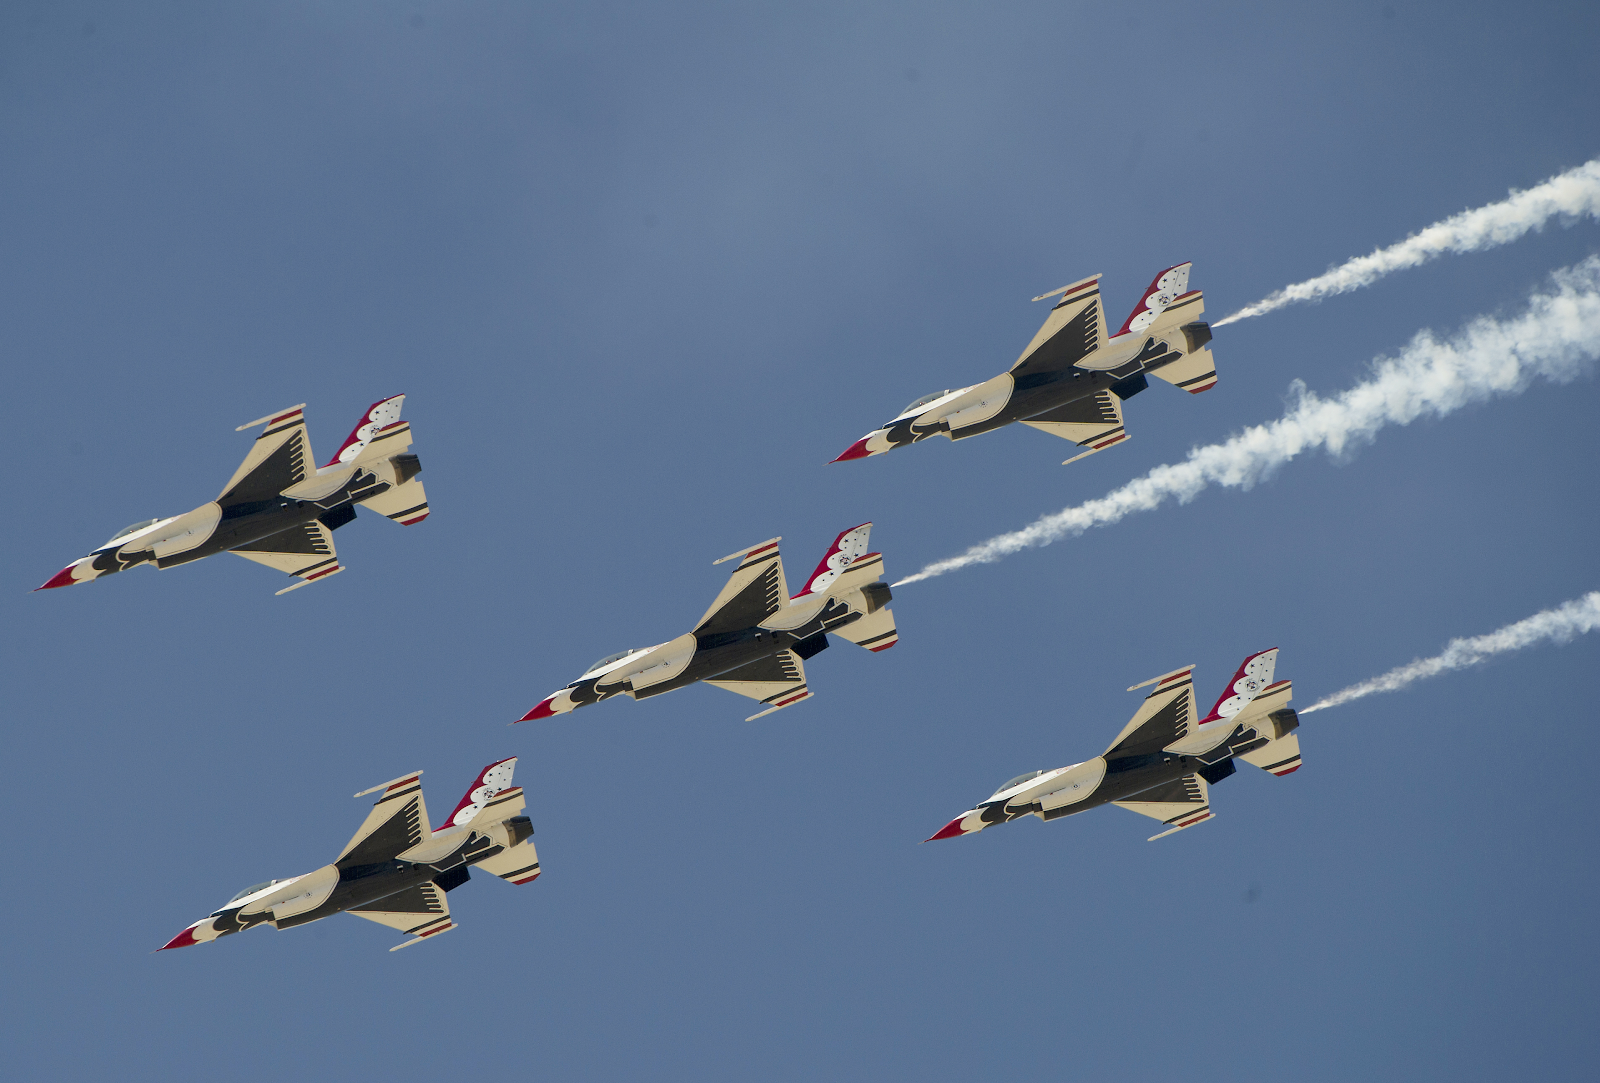  Air-Show-US-Air-Force-Thunderbirds-Demonstration   